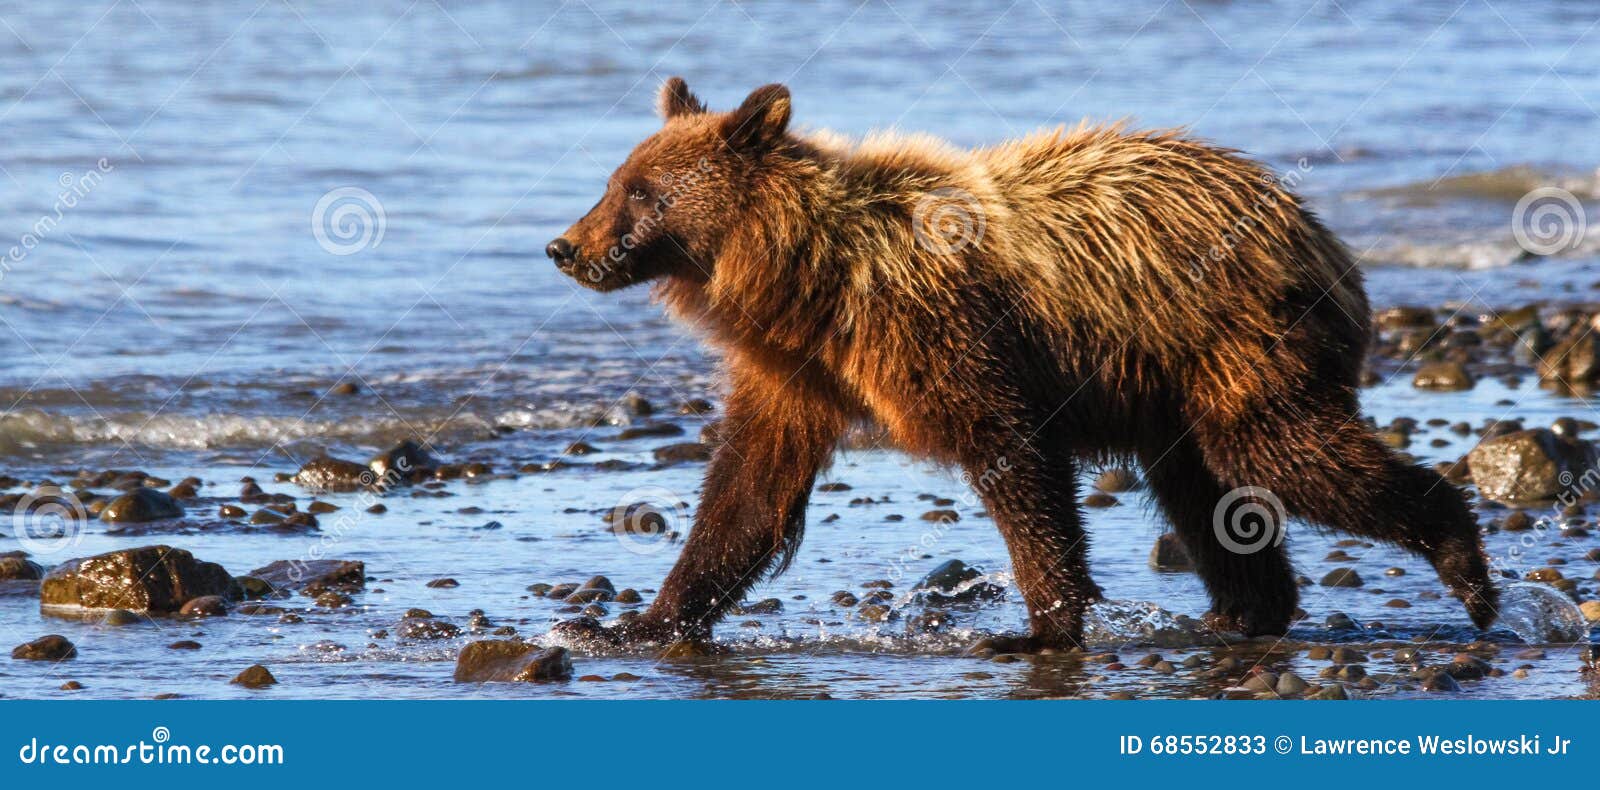 alaska lake clark young brown grizzly bear walking